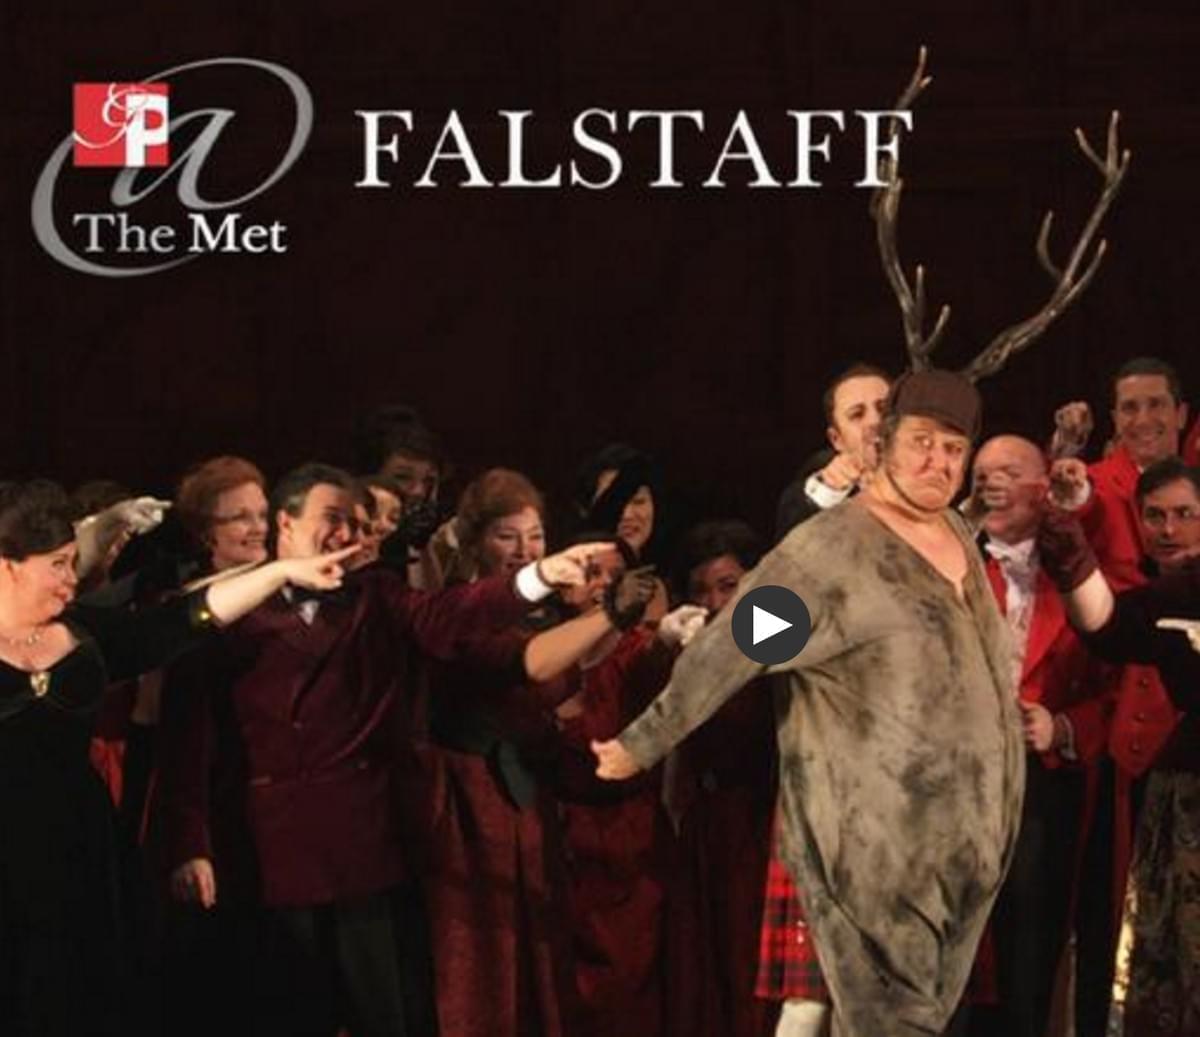 The Metropolitan Opera's Falstaff on PBS